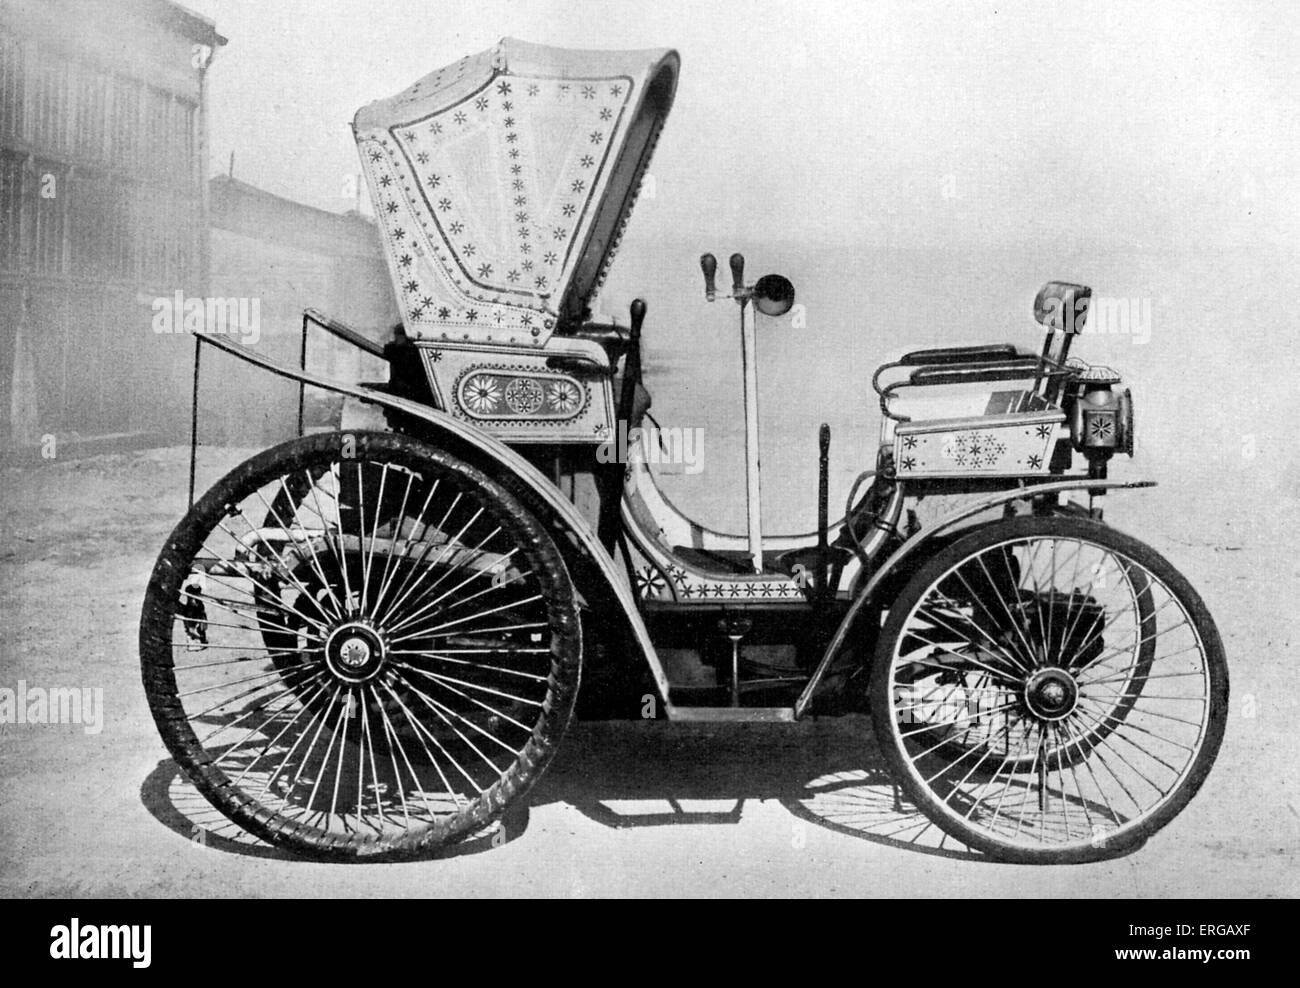 Peugeot dal 1849, di proprietà del Bey (regolatore) di Tunisi. Motore 2CV 3/4 Panhard. Foto Stock